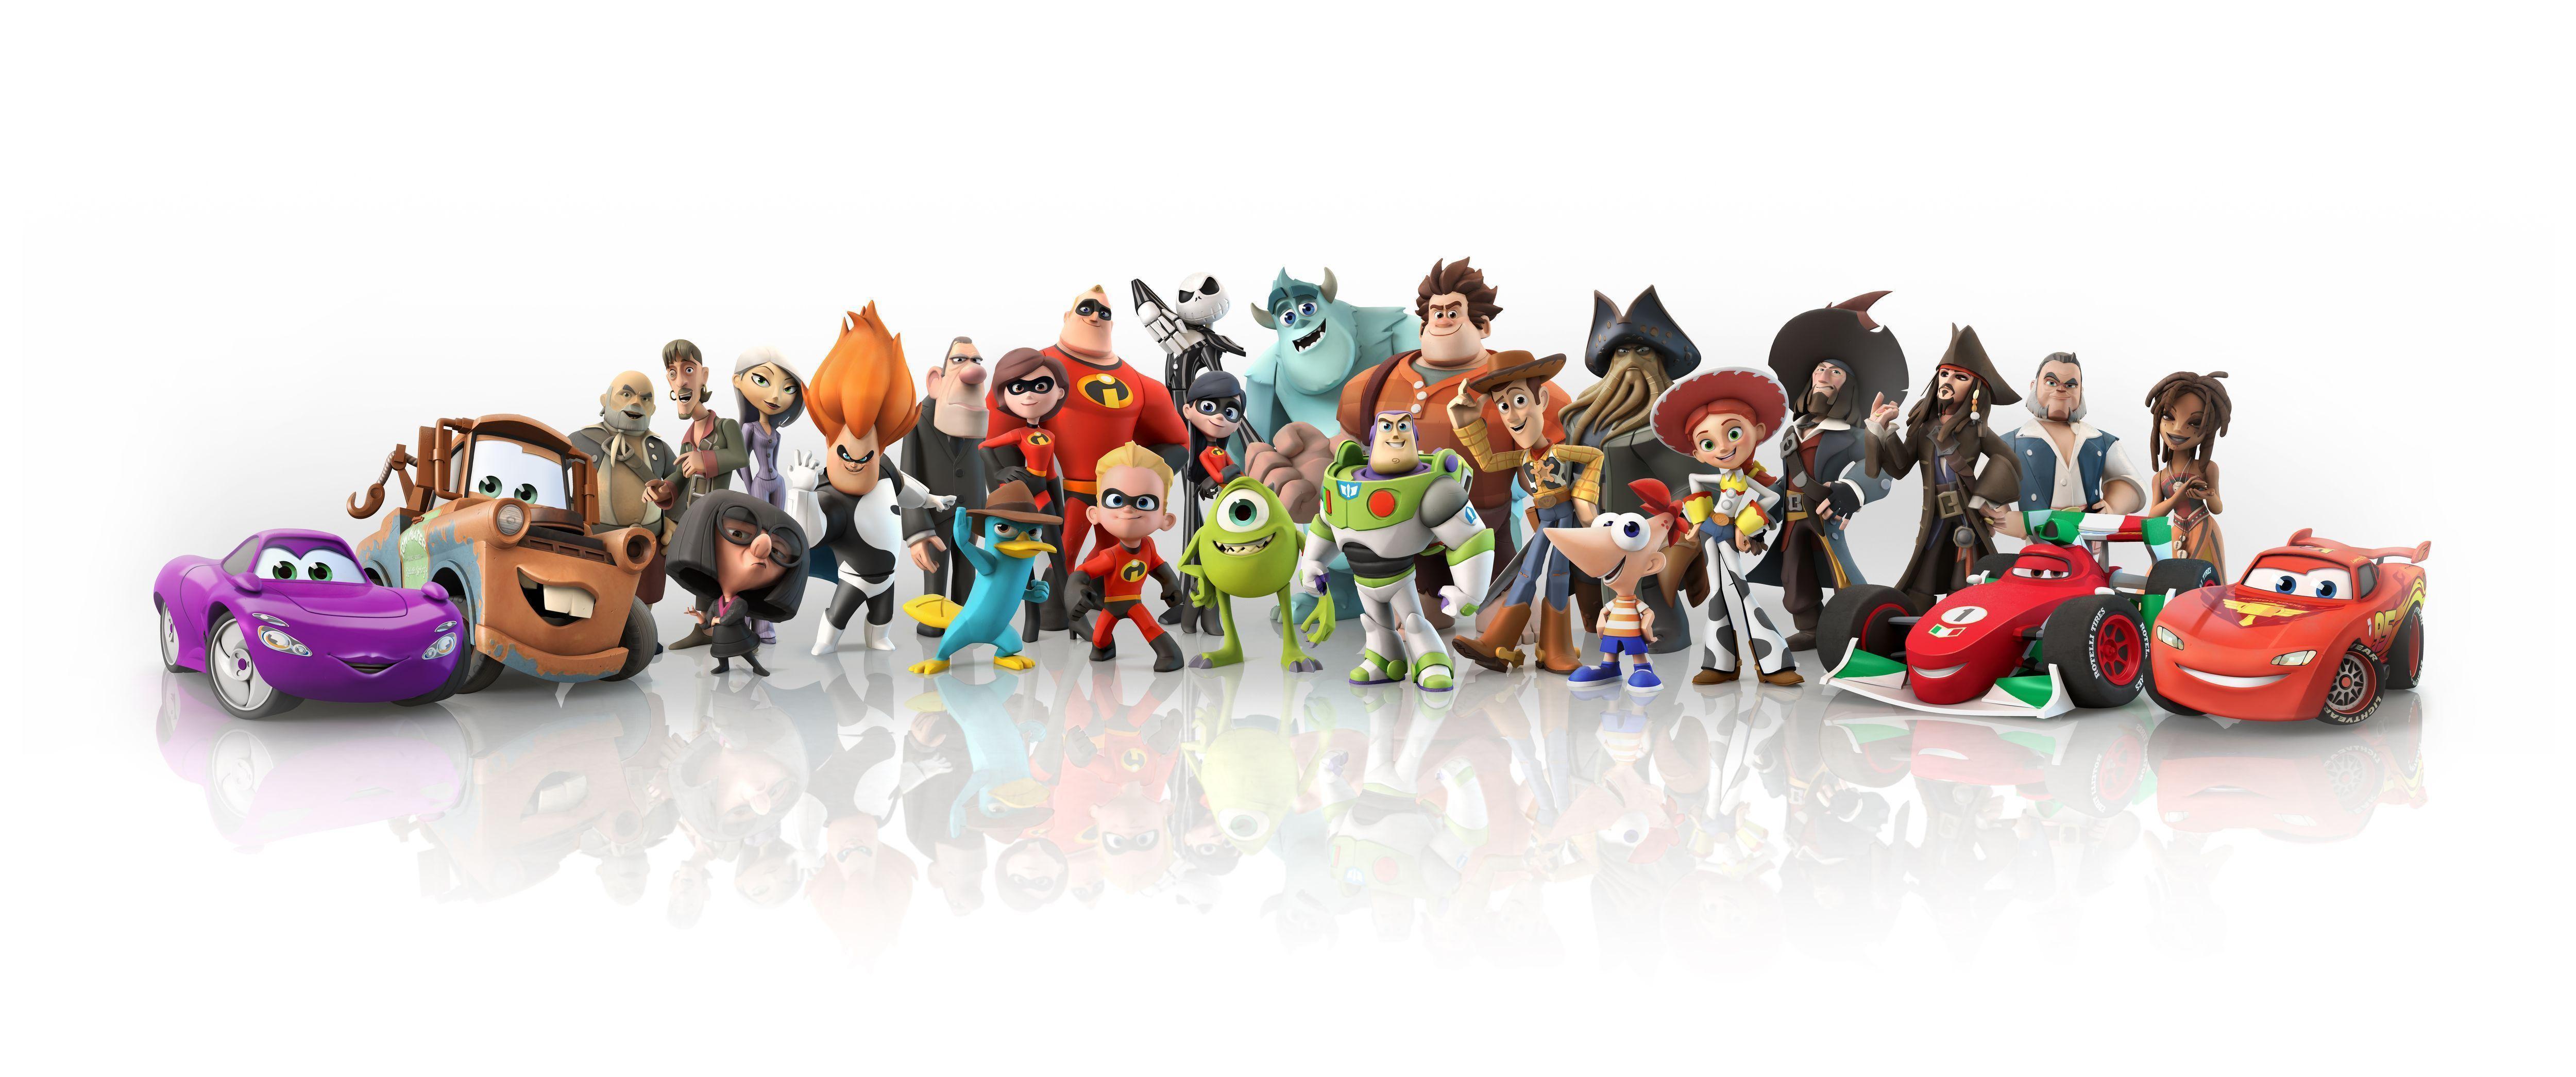 Disney Pixar Compilation Image HD Wallpaper Download. HD